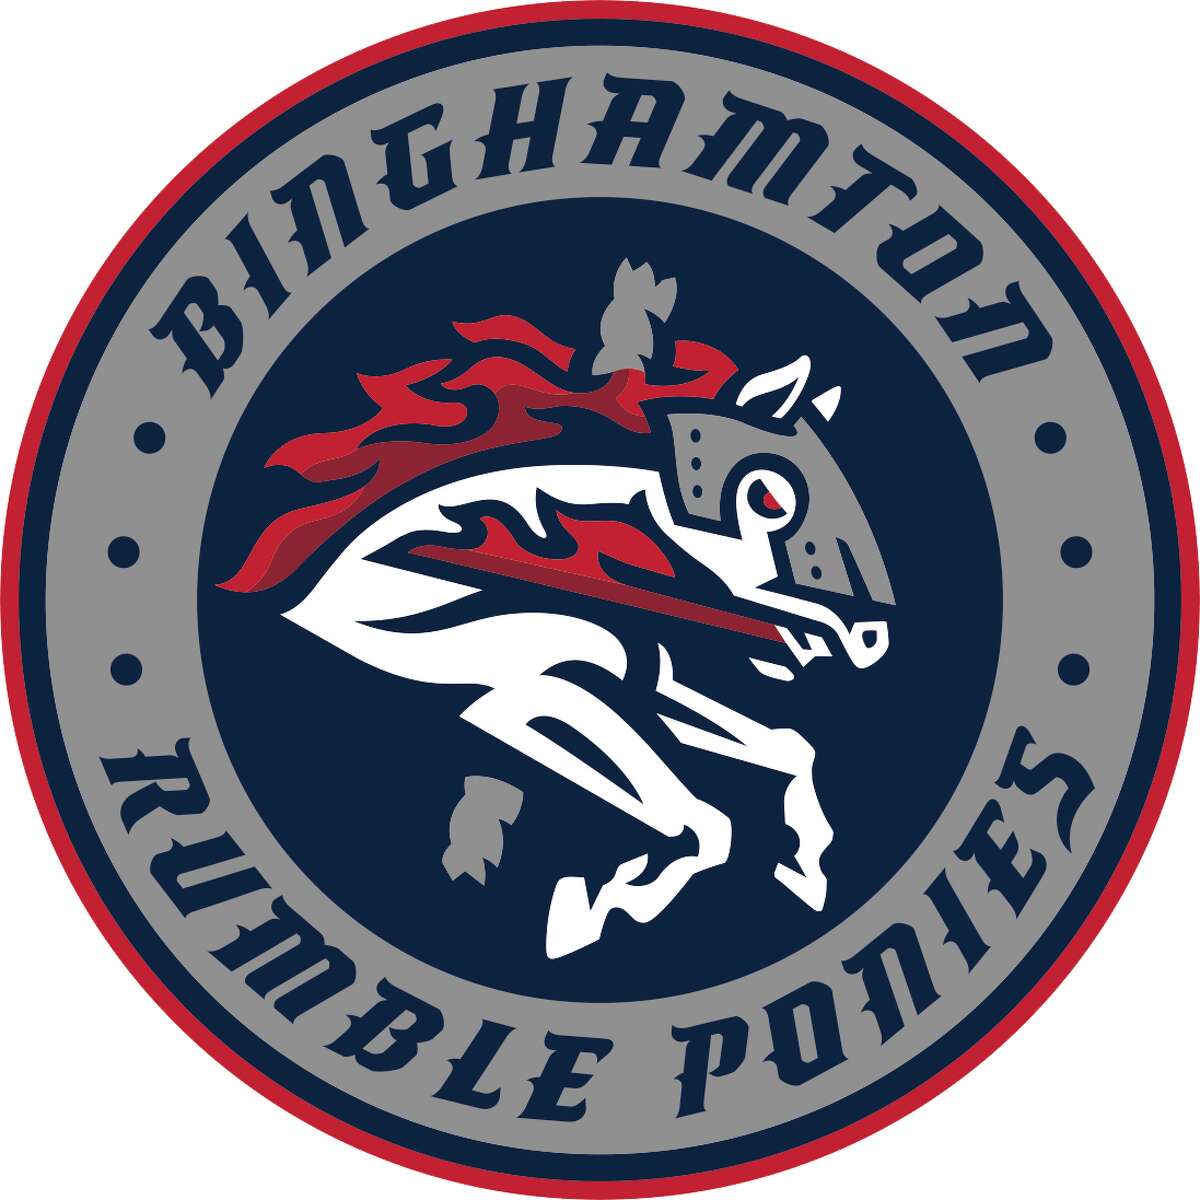  New minor league logos turn up in Savannah